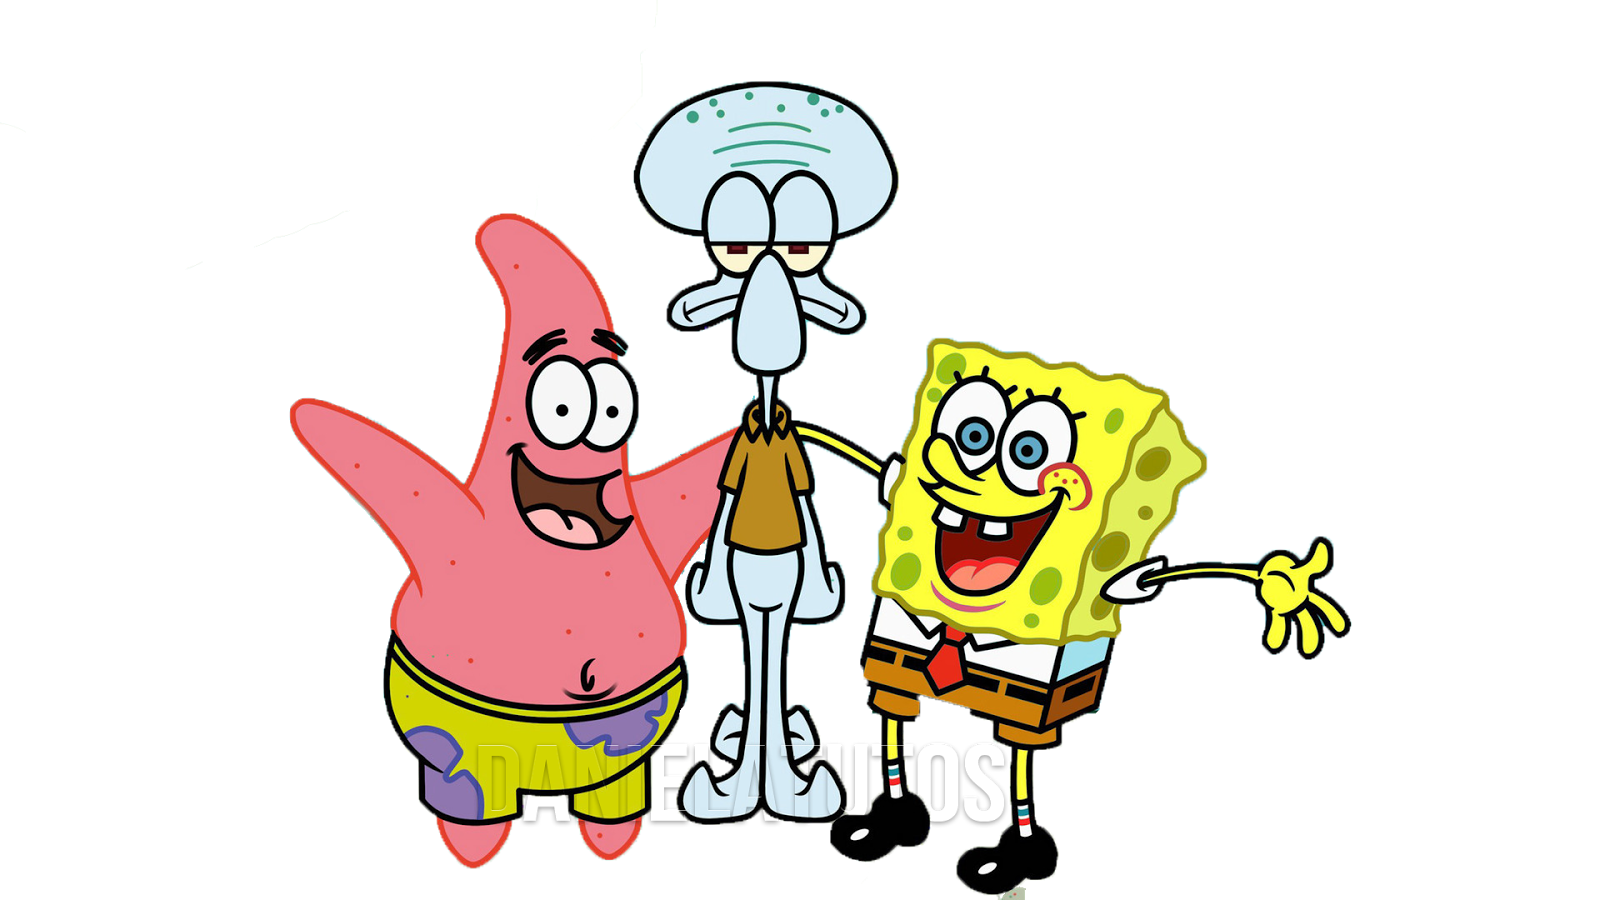 spongebob and friends images